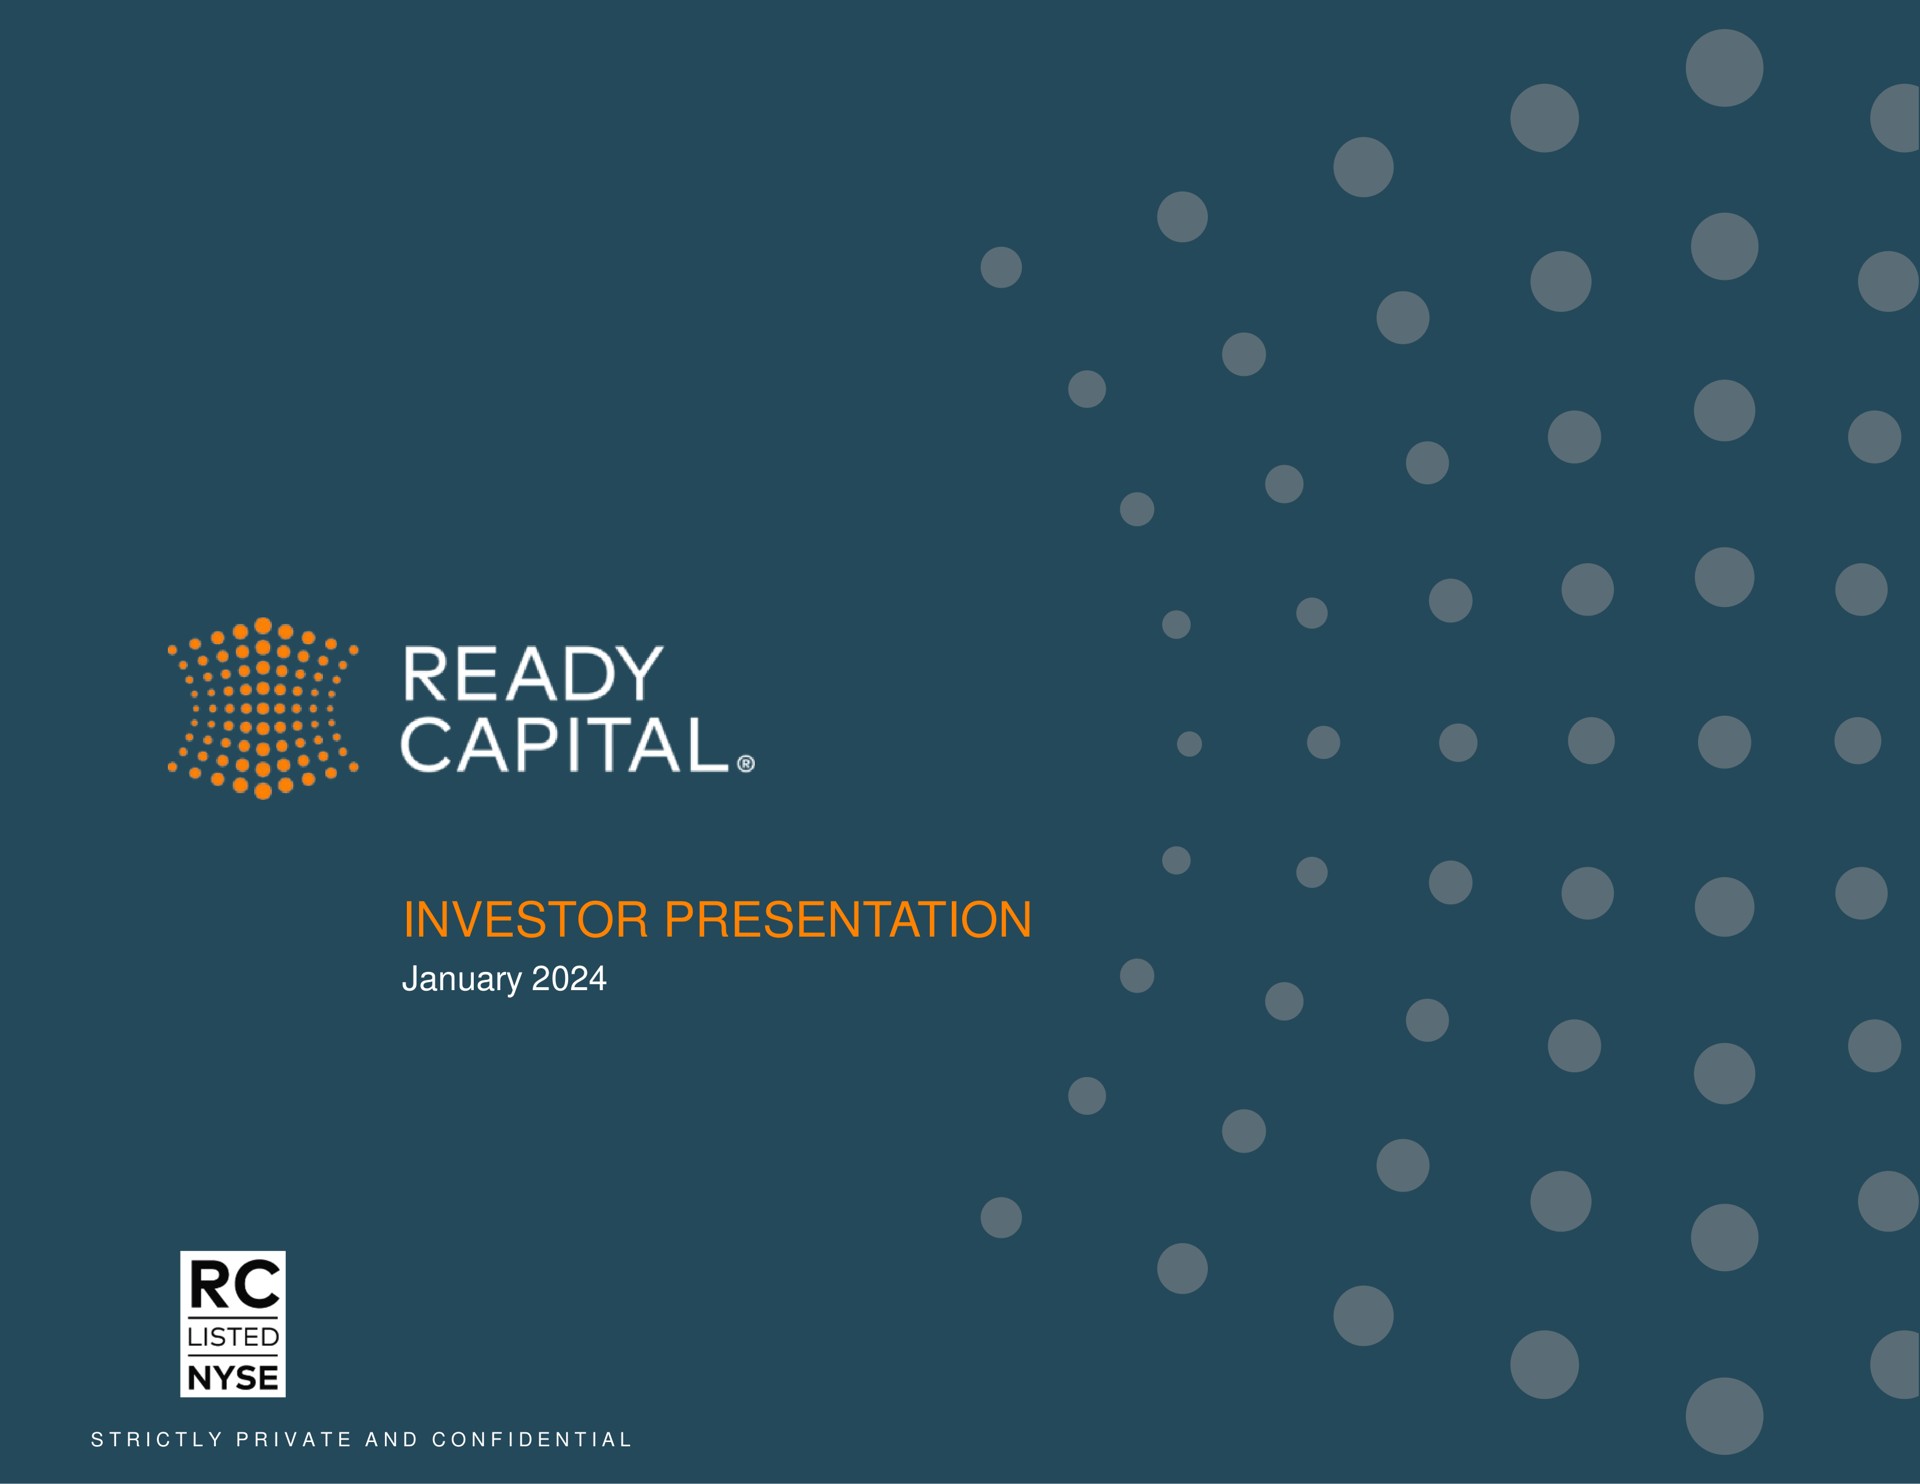 investor presentation ready capital | Ready Capital